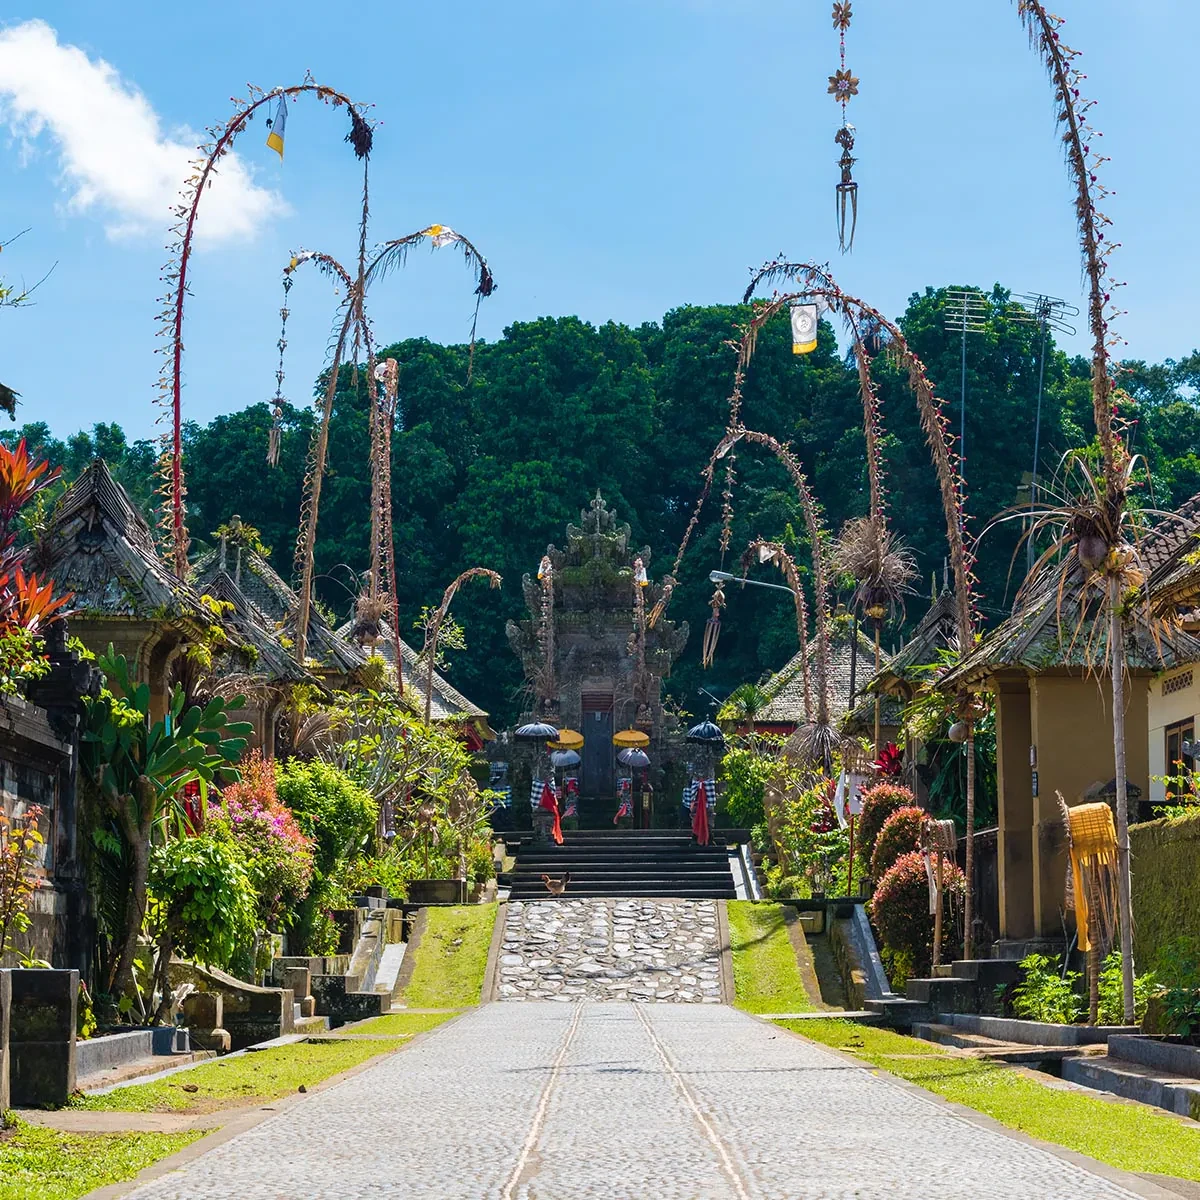 penglipuran village in indonesia